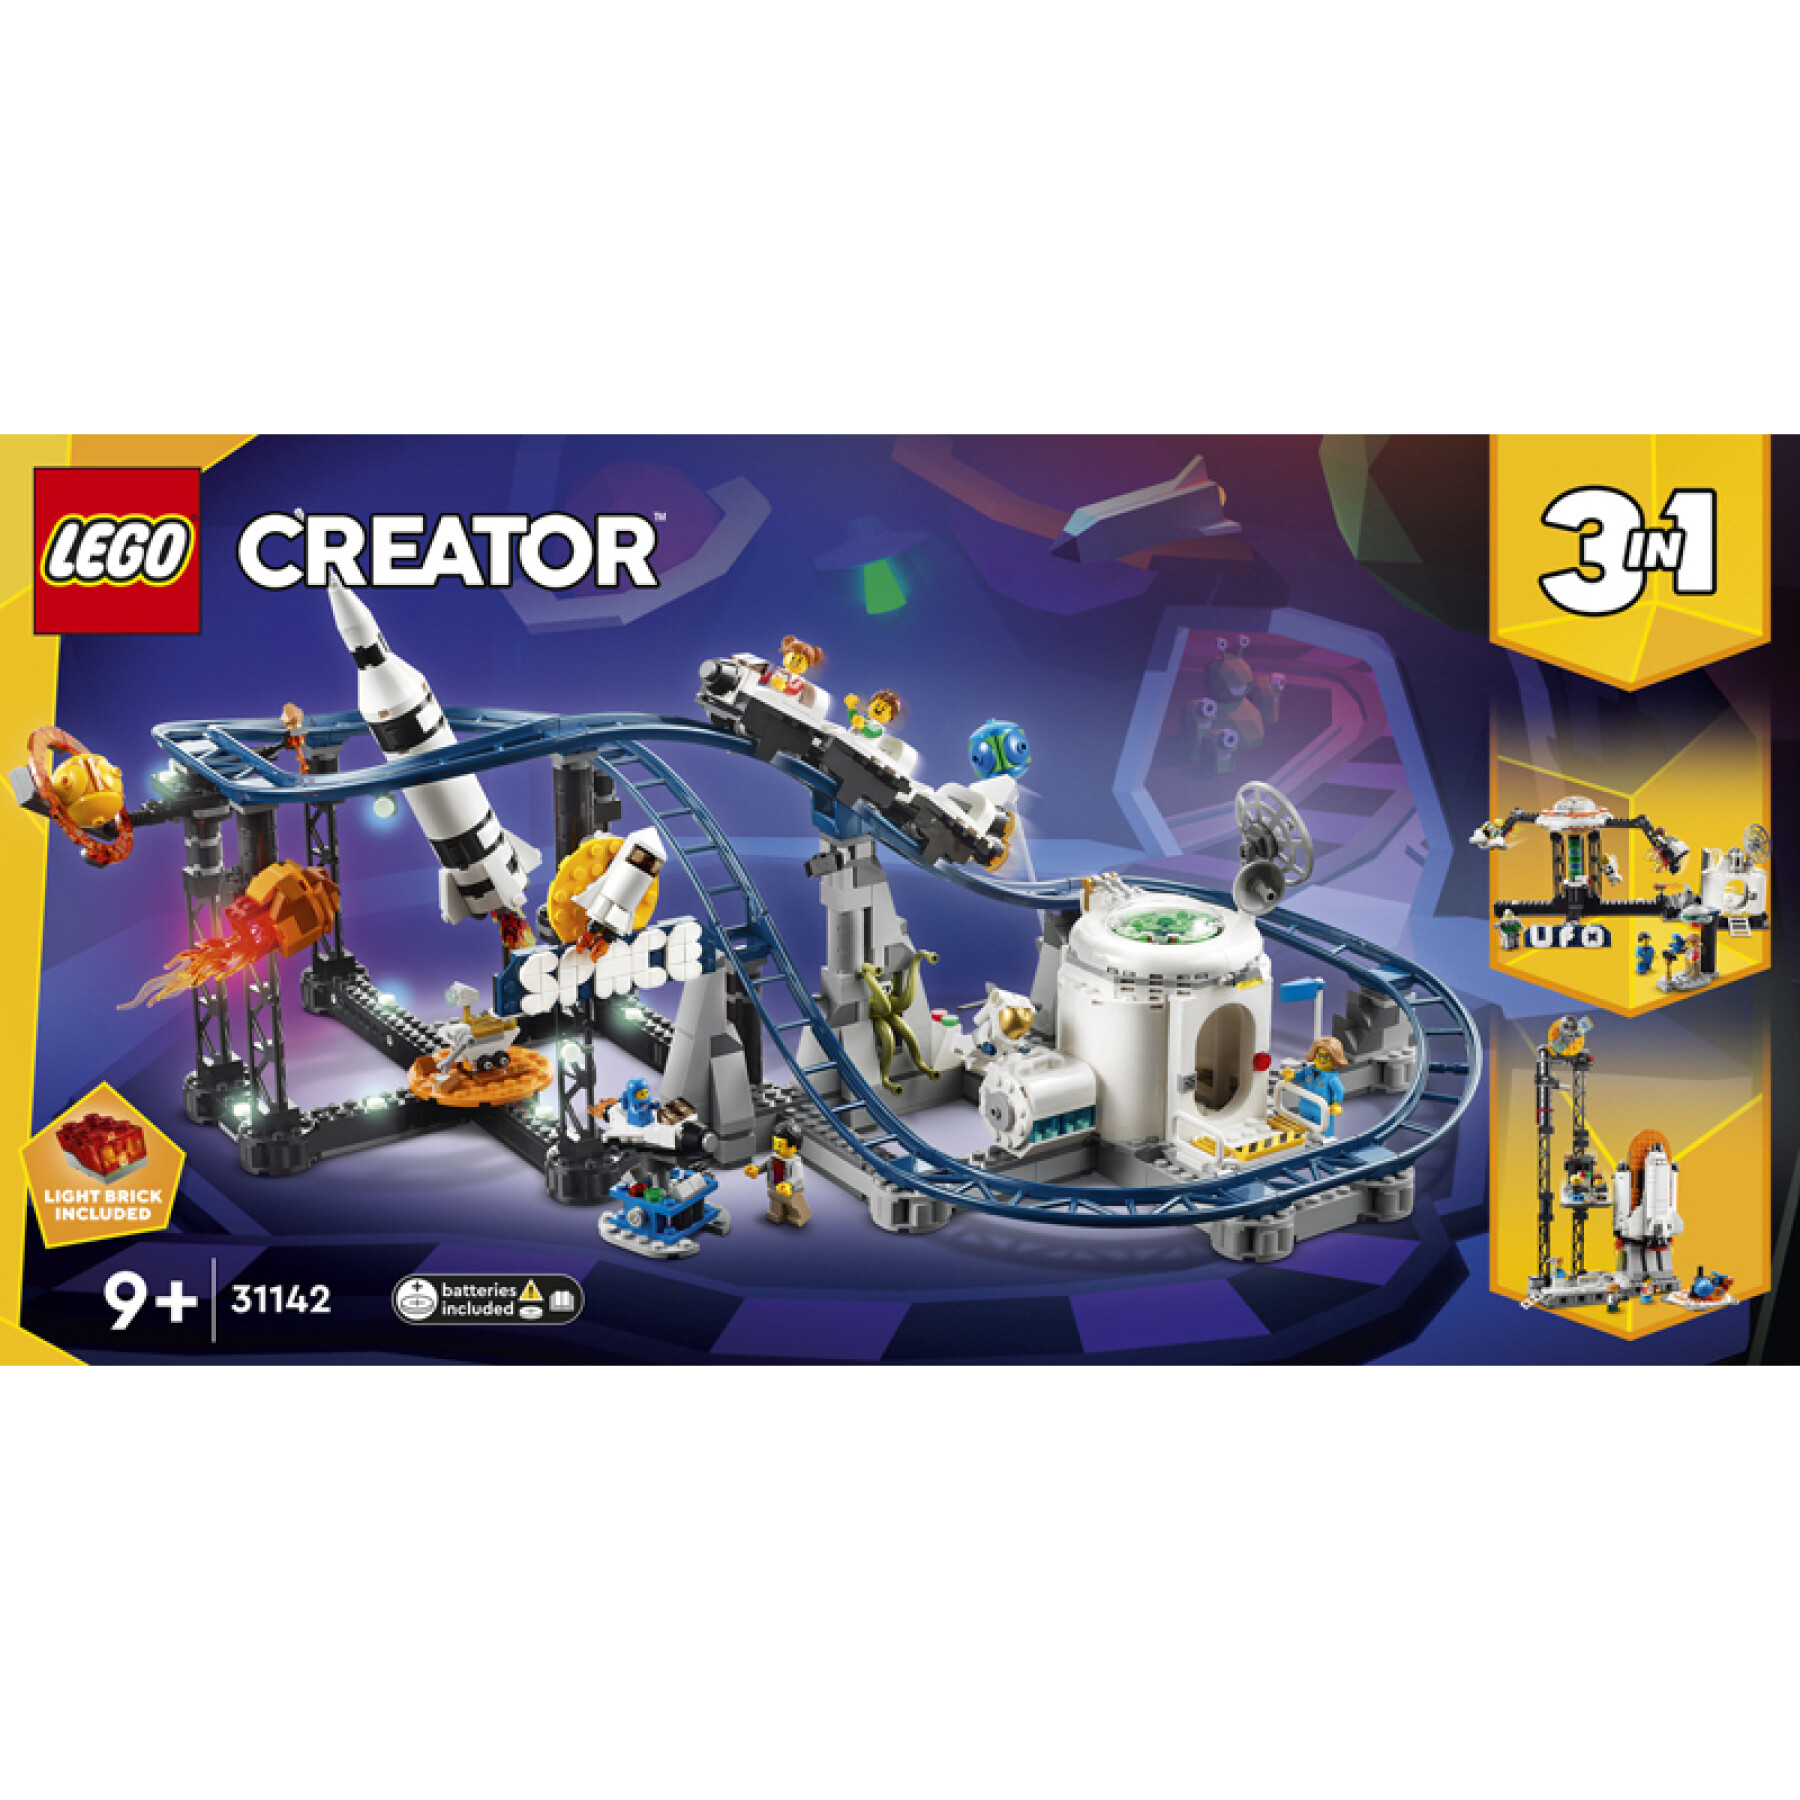 Space creator roller coaster building sets Lego